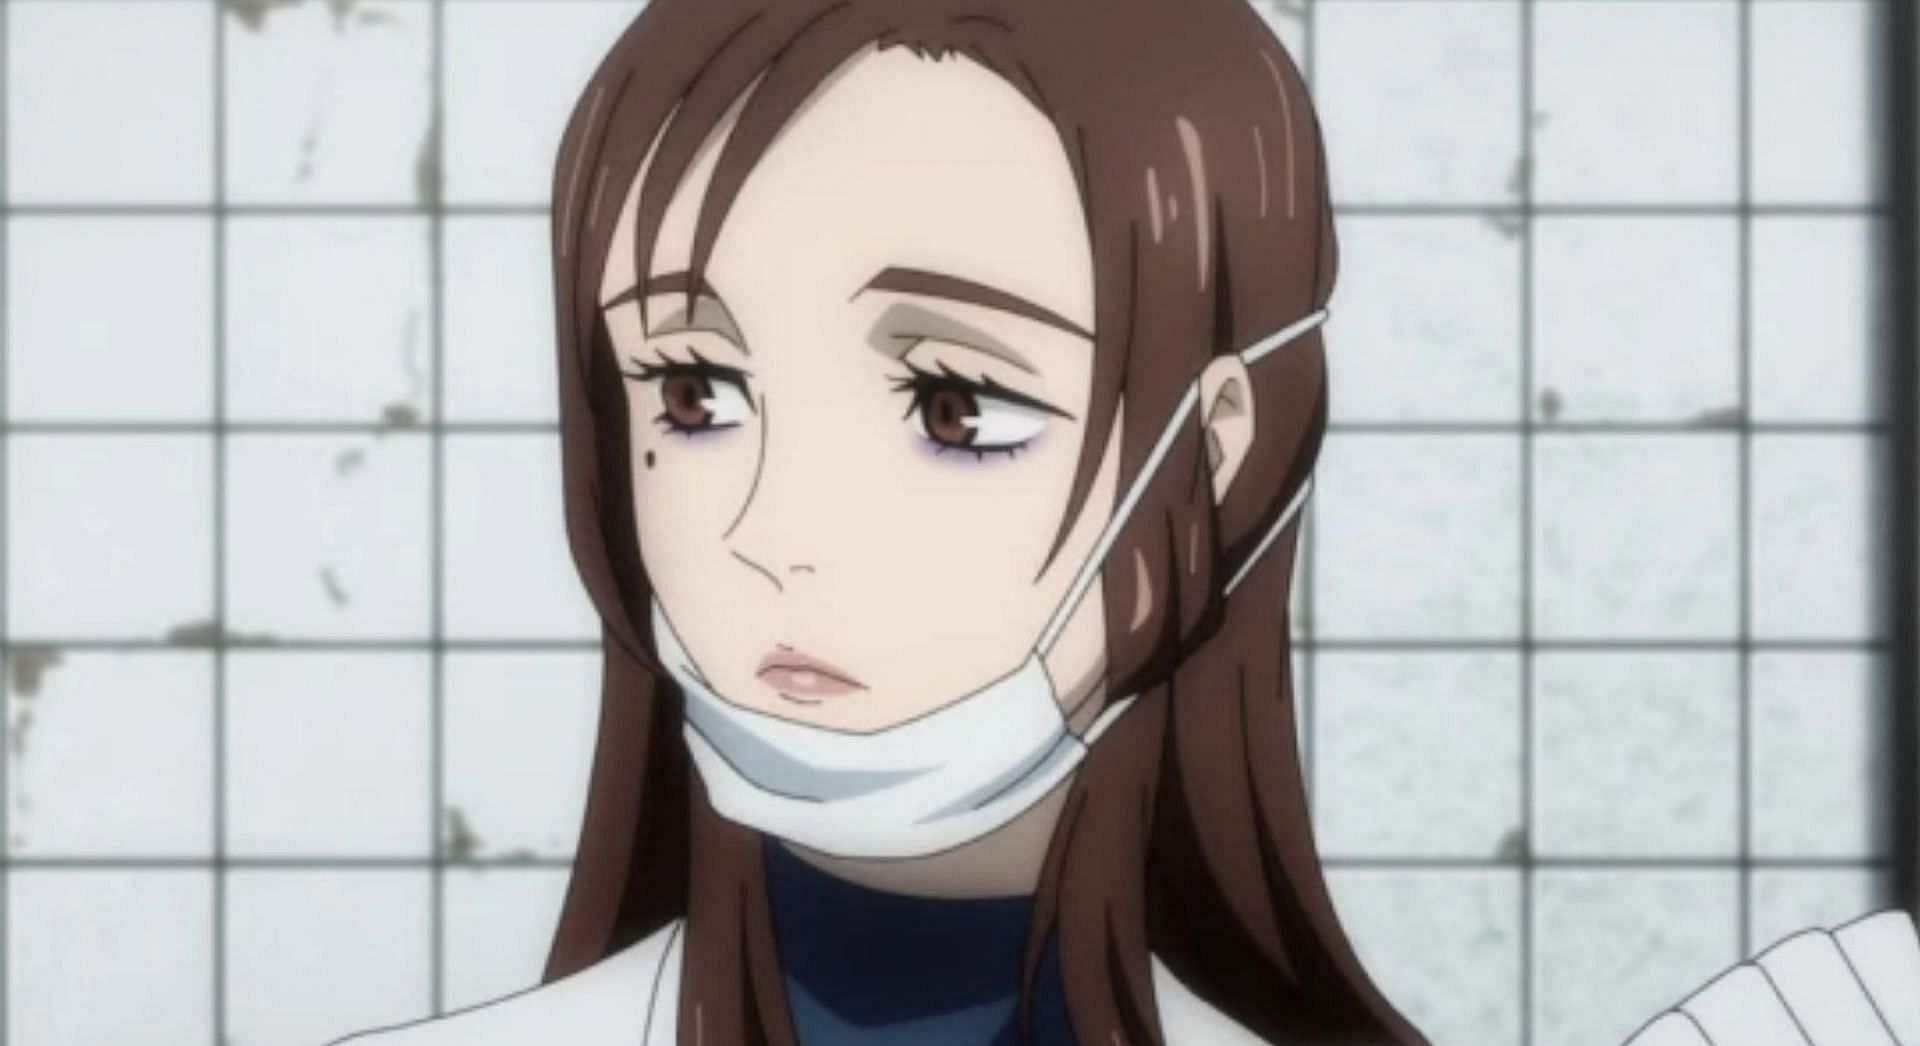 Shoko Ieiri as seen in the Jujutsu Kaisen anime (Image via MAPPA)